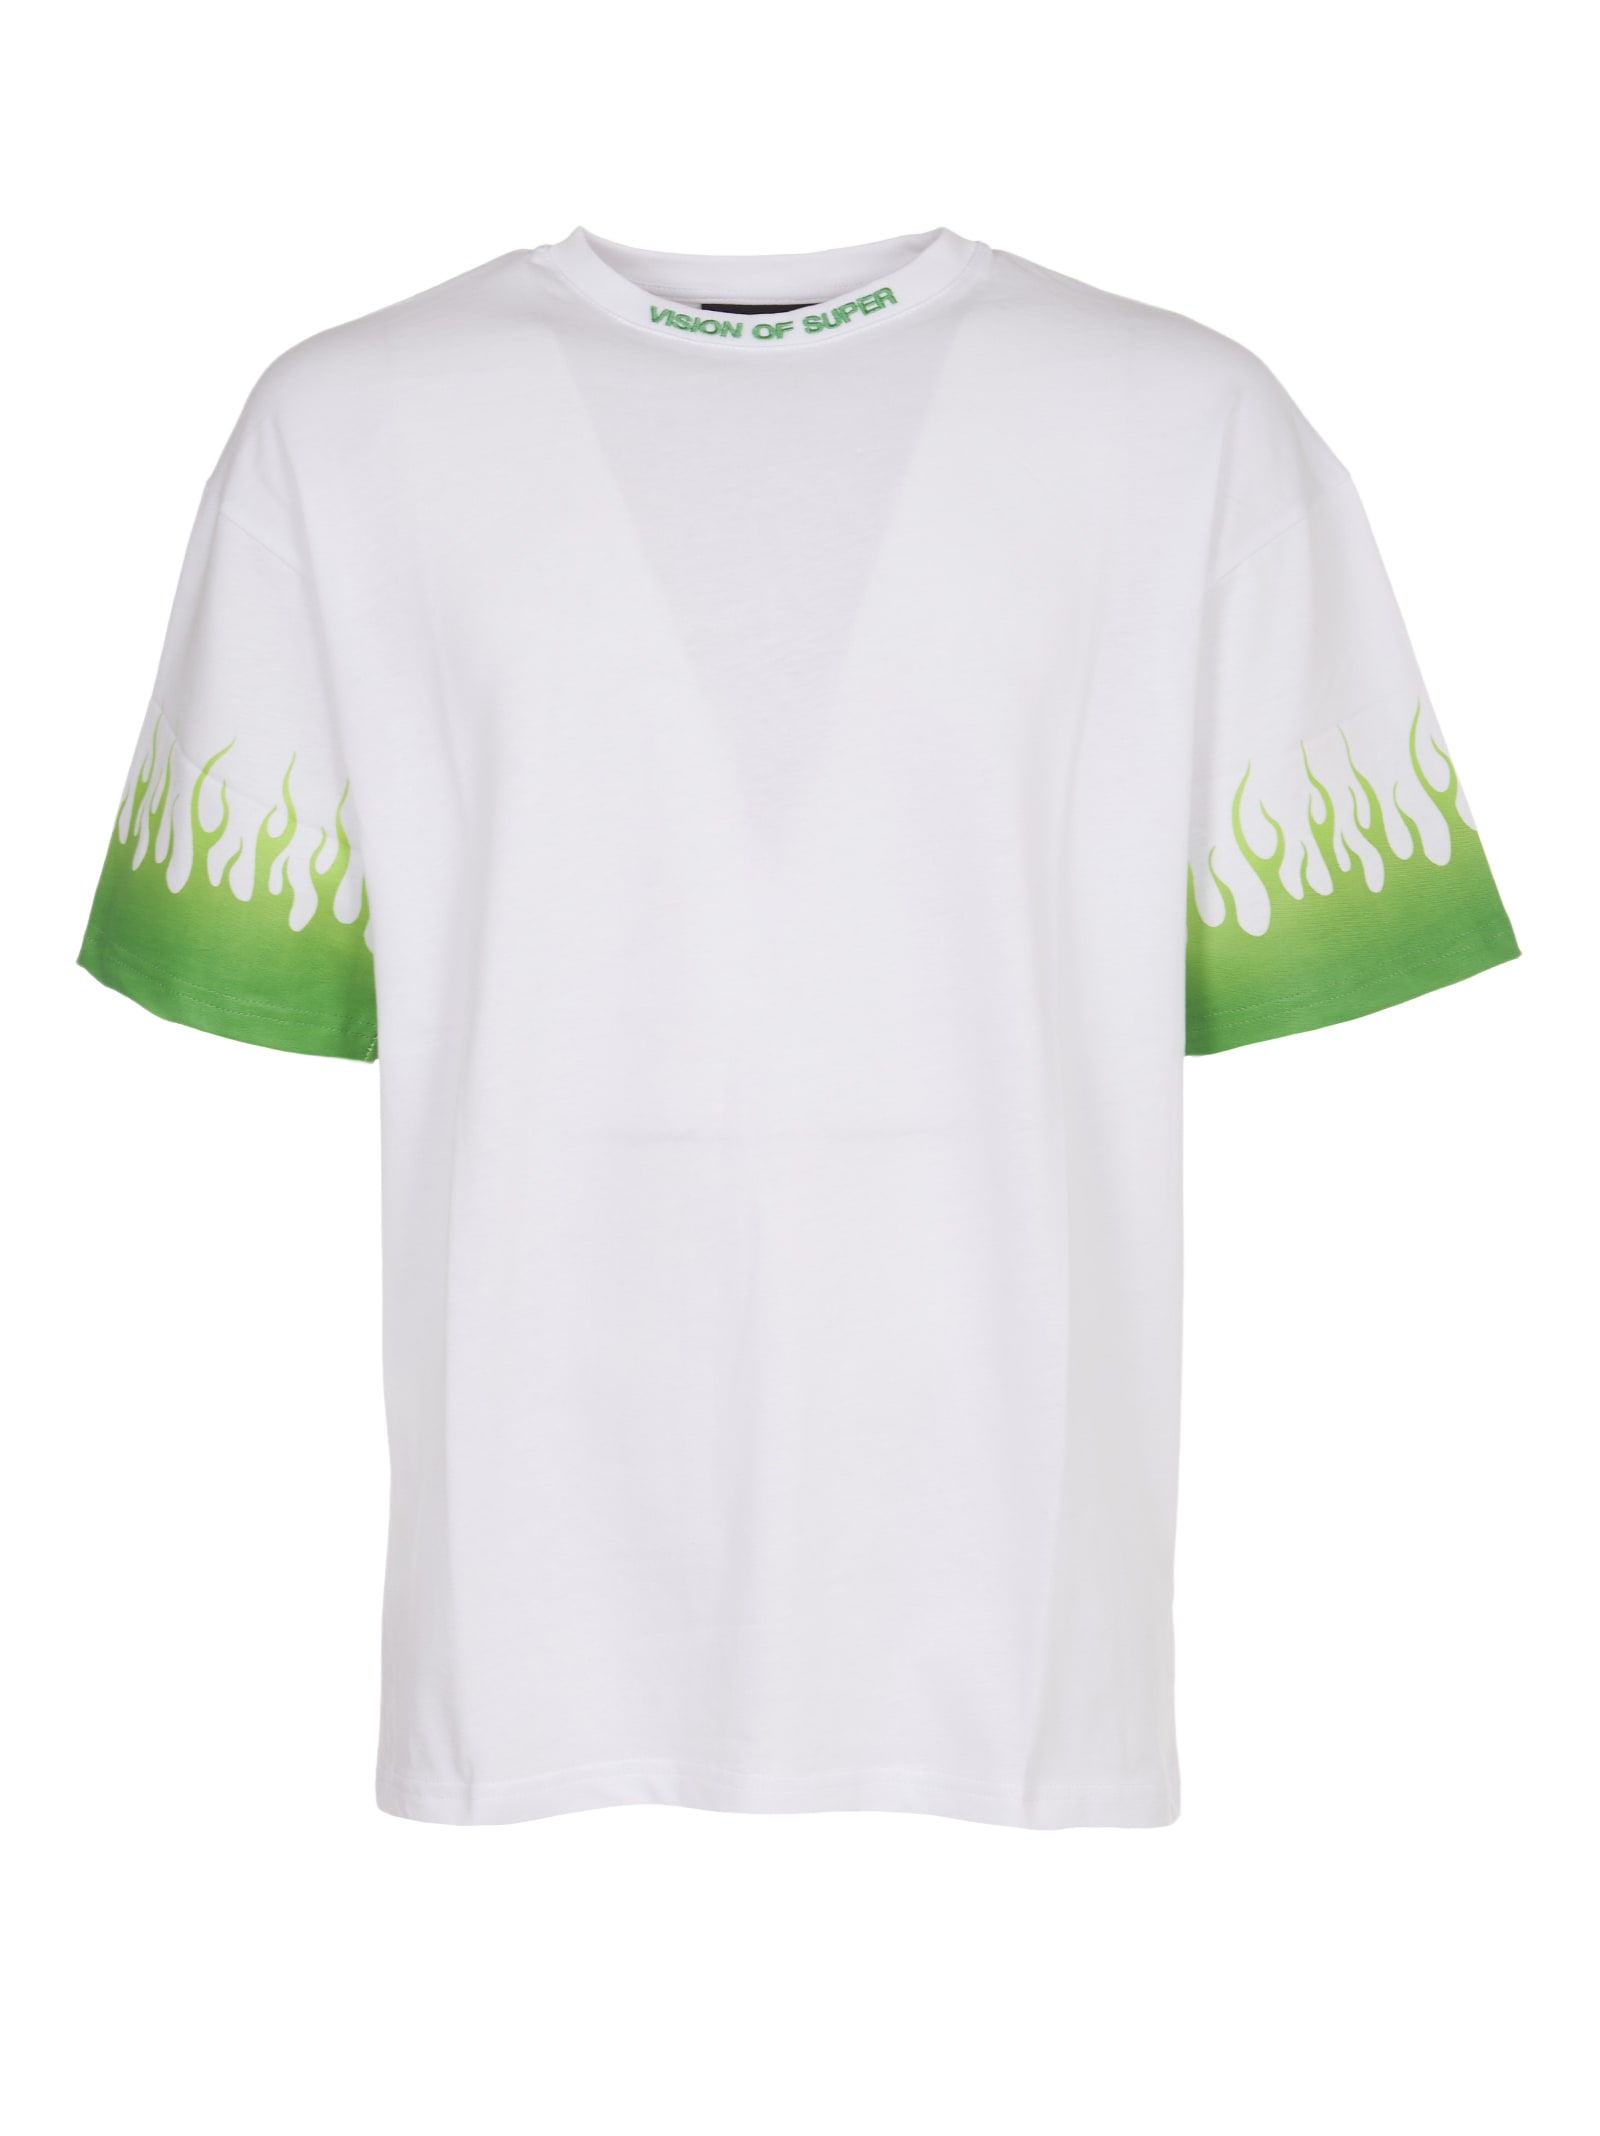 Vision of Super Green Flames T-shirt